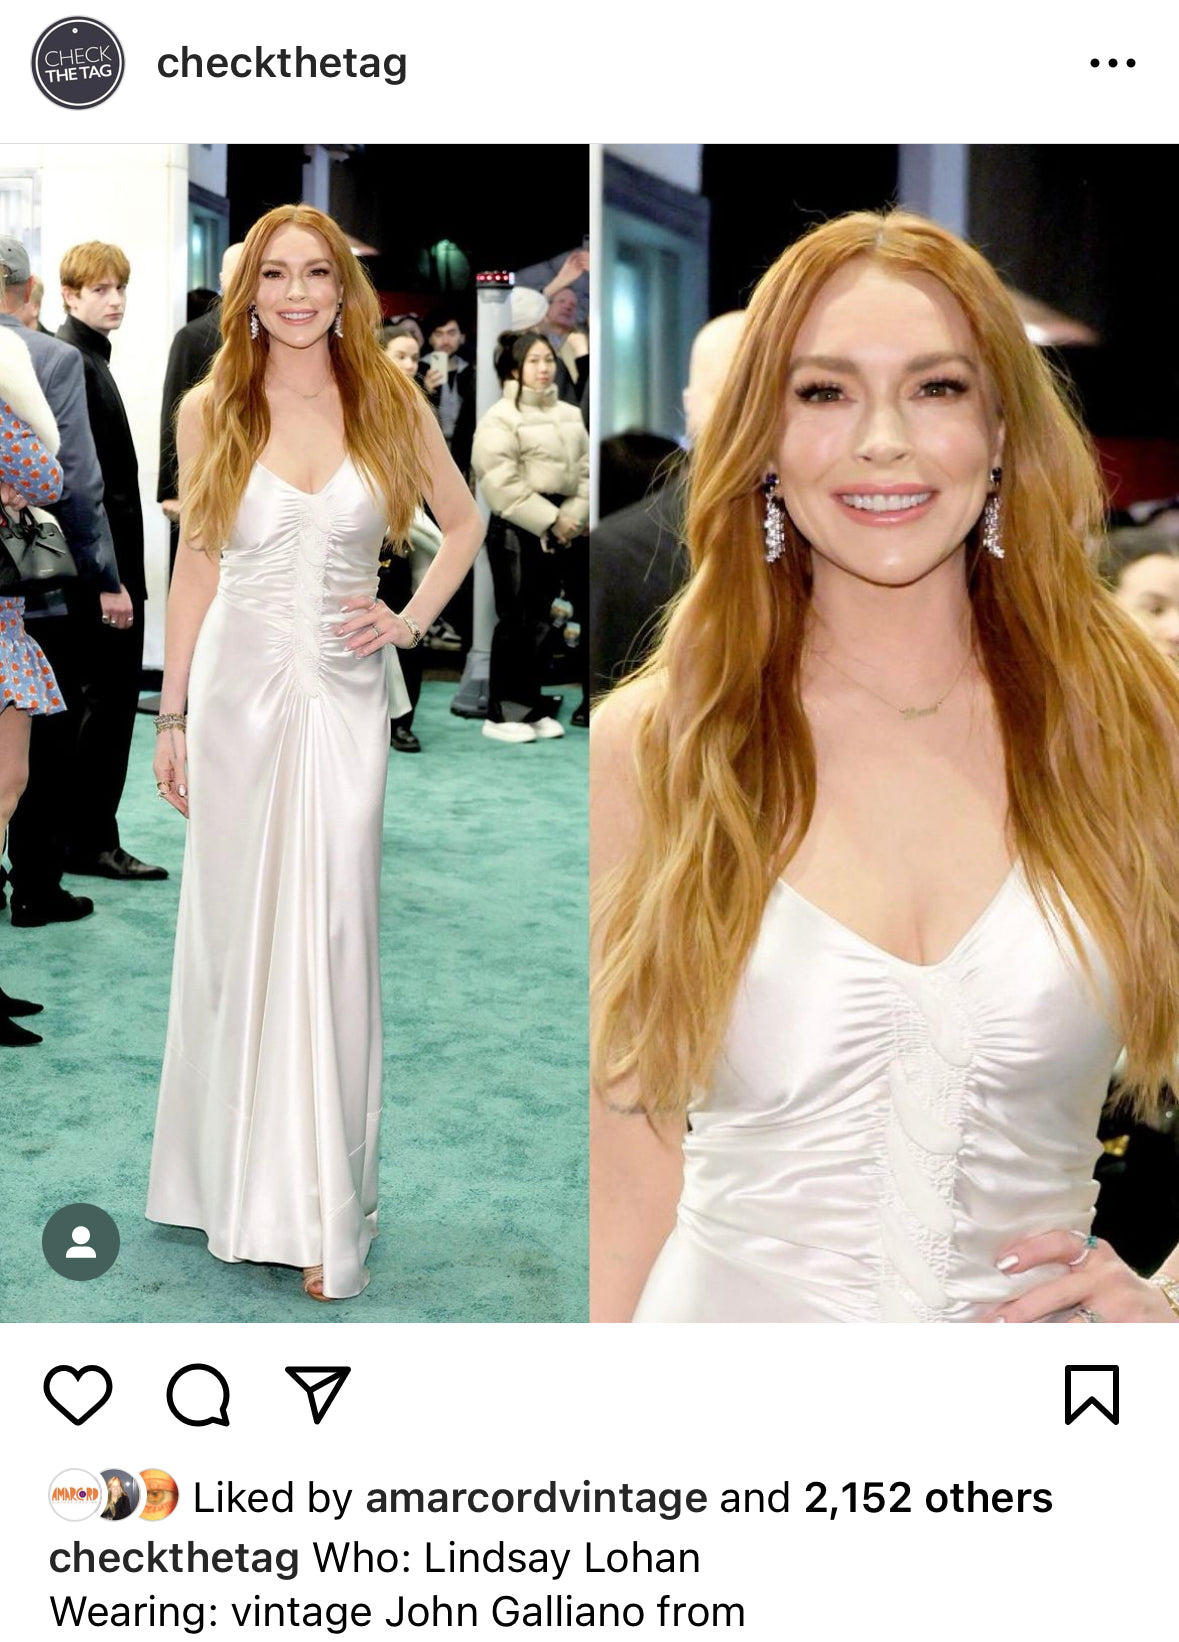 @checkthetag on Instagram posts Lindsay Lohan wearing Lindsay Lohan wearing John Galliano S/S 2006 White Satin Bias Cut Dress at the NYC premiere of "Irish Wish"